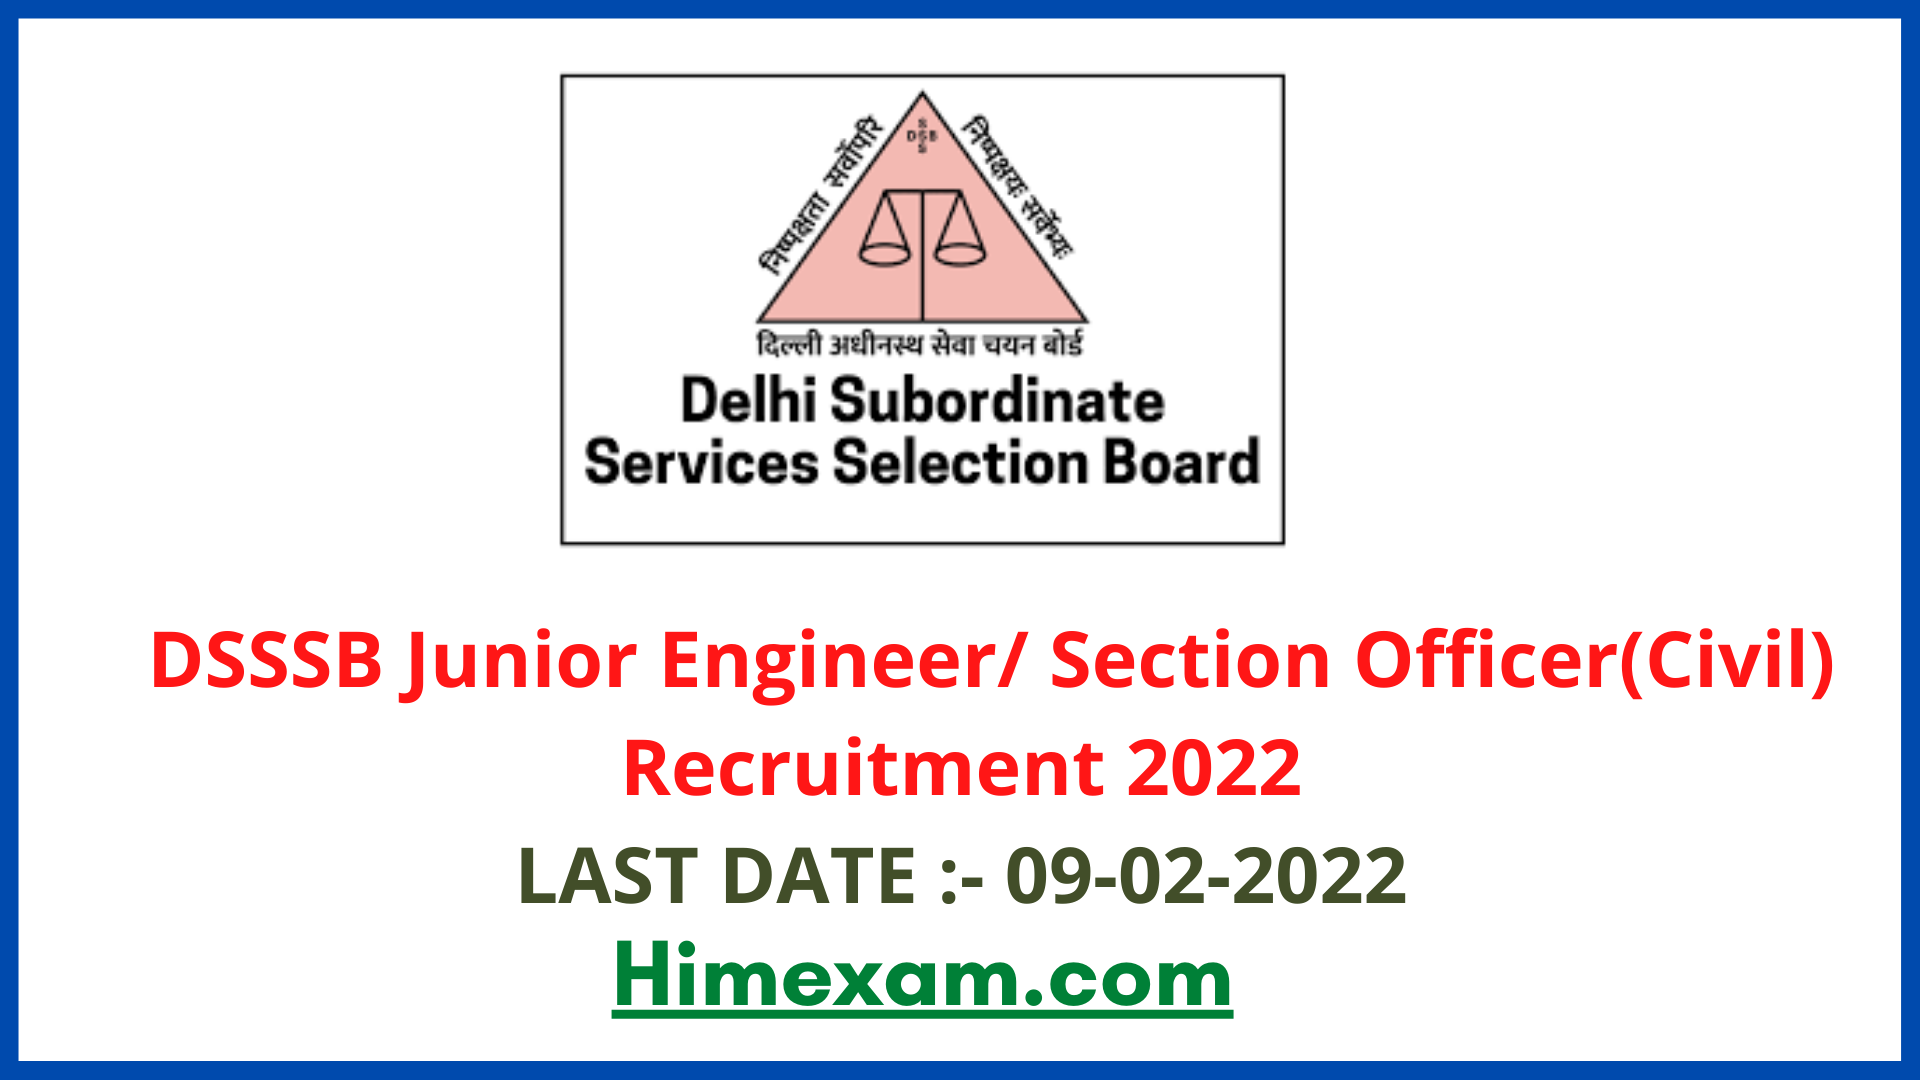 DSSSB Junior Engineer/ Section Officer(Civil) Recruitment 2022